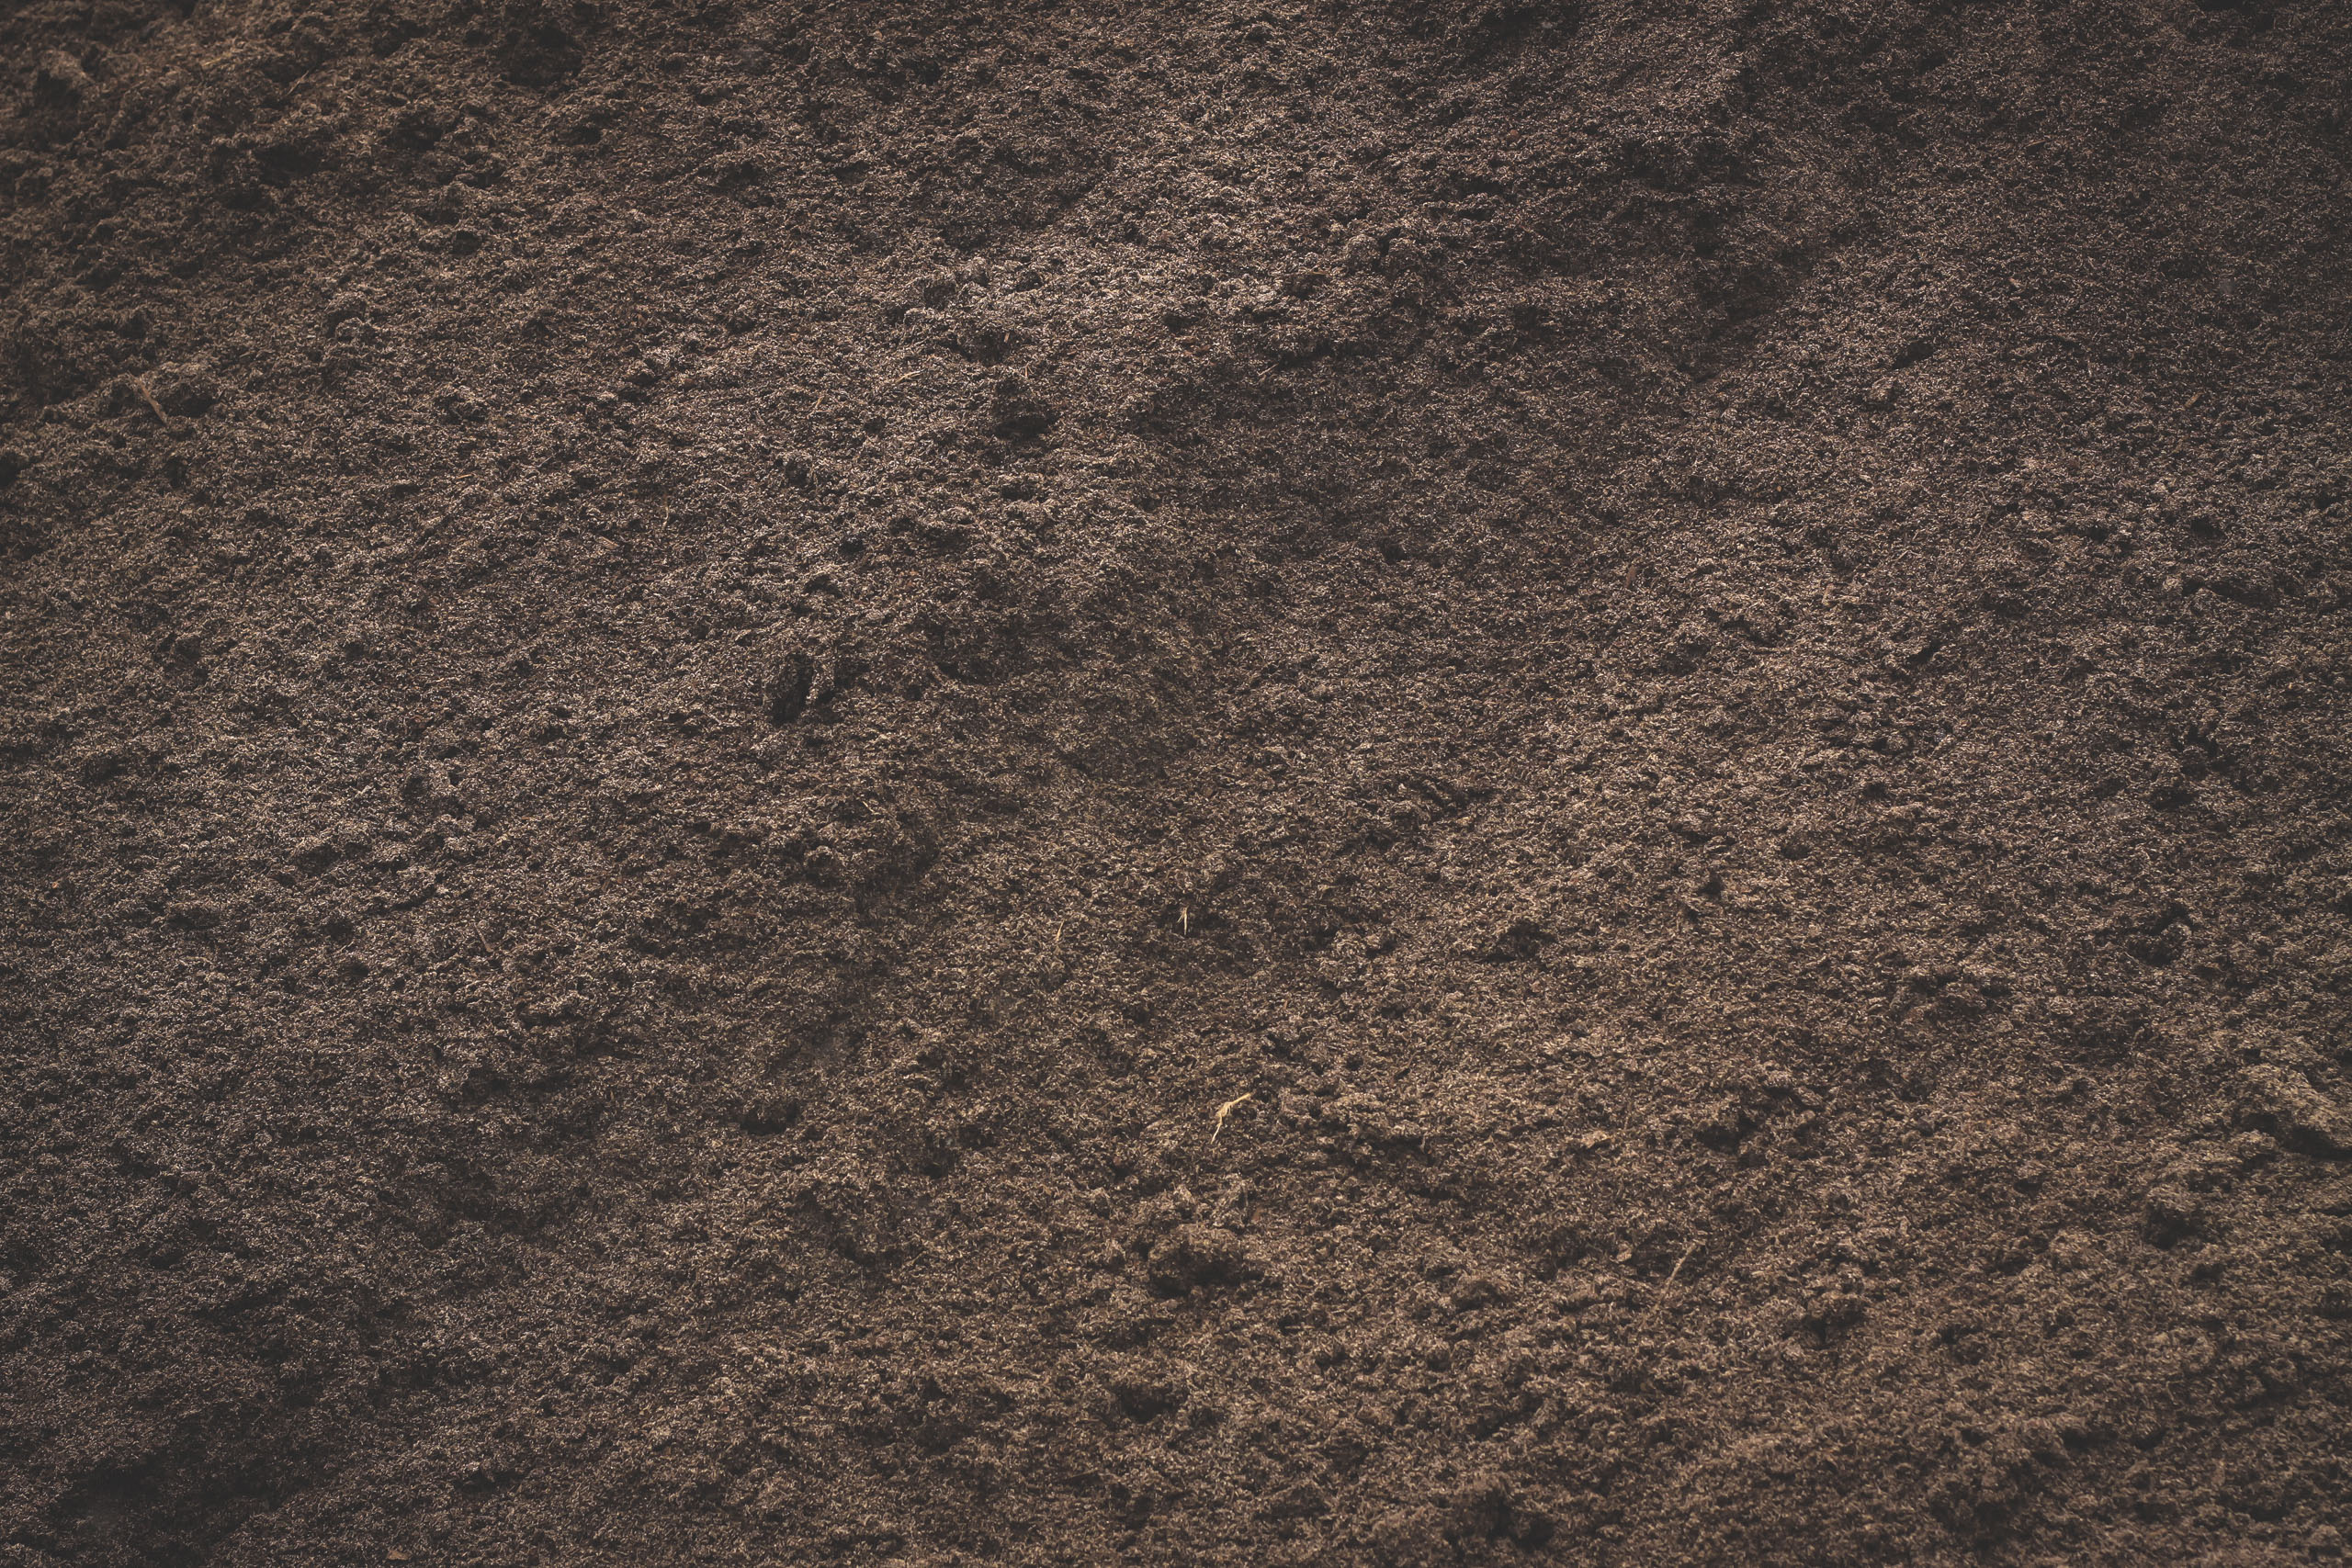 Nitro Mix soil Closeup Landscape Supply Photography